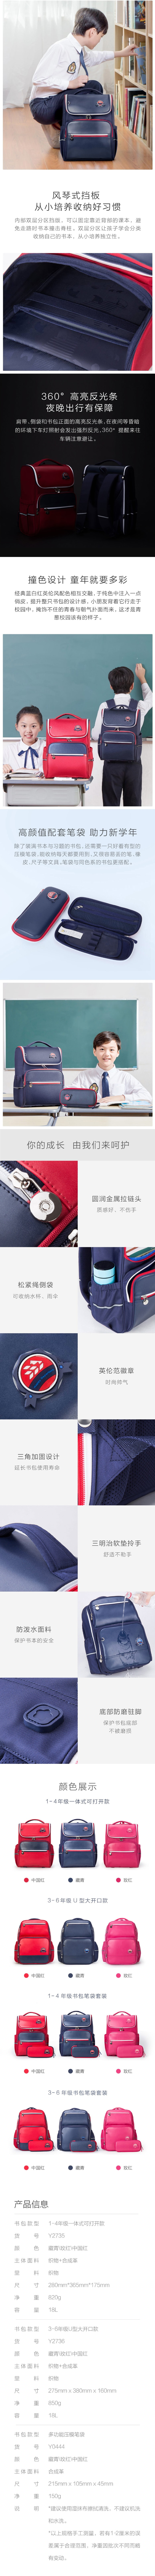 Xiao Yang grade 1-6 light weight ridge protection bag rose 1 / bag